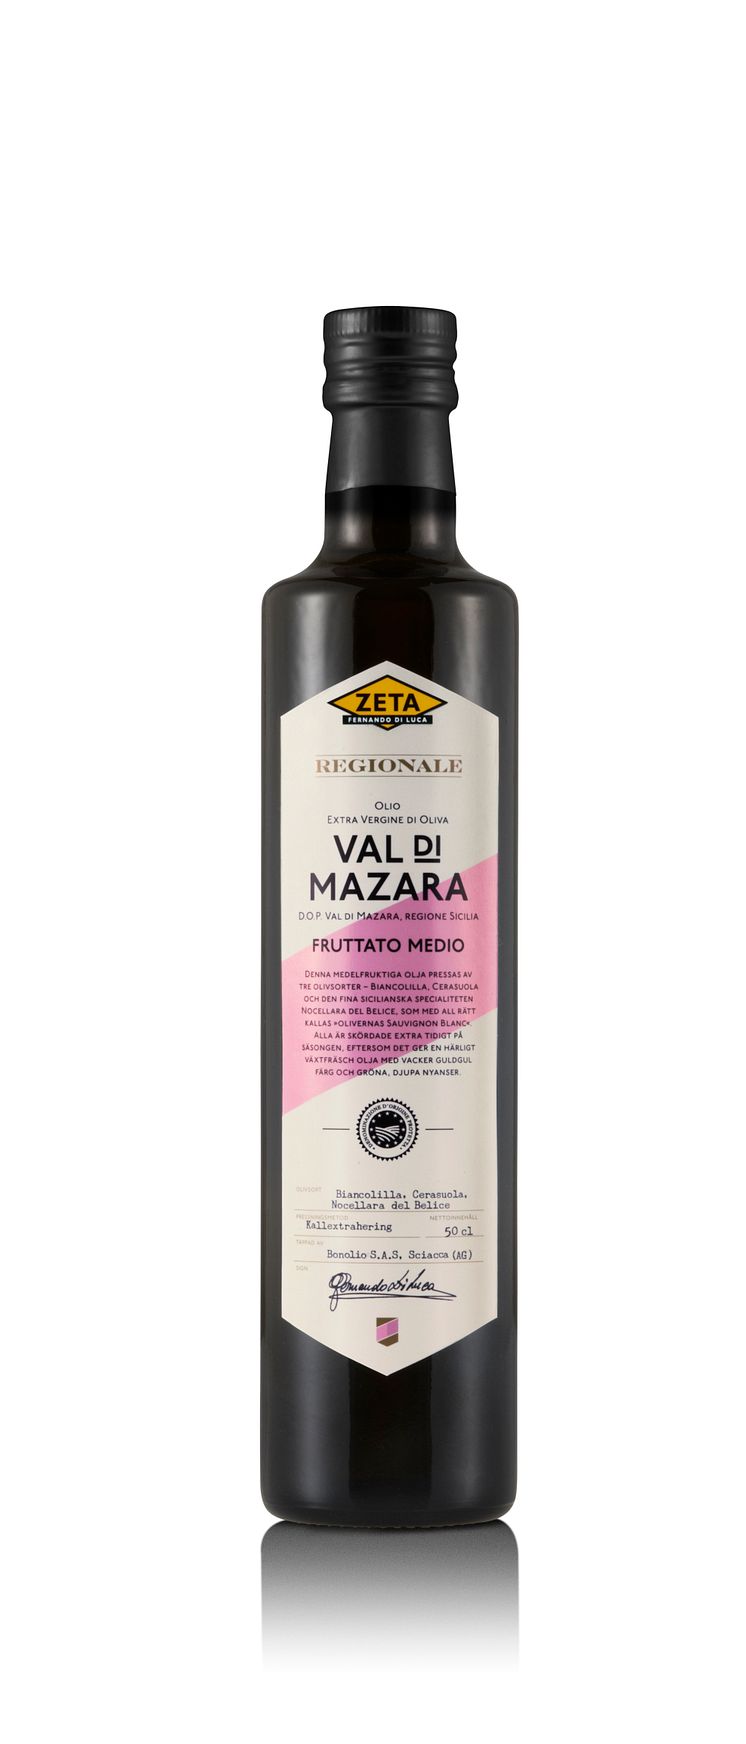 Val di Mazara D.O.P., olivolja från Sicilien, Zeta Regionale